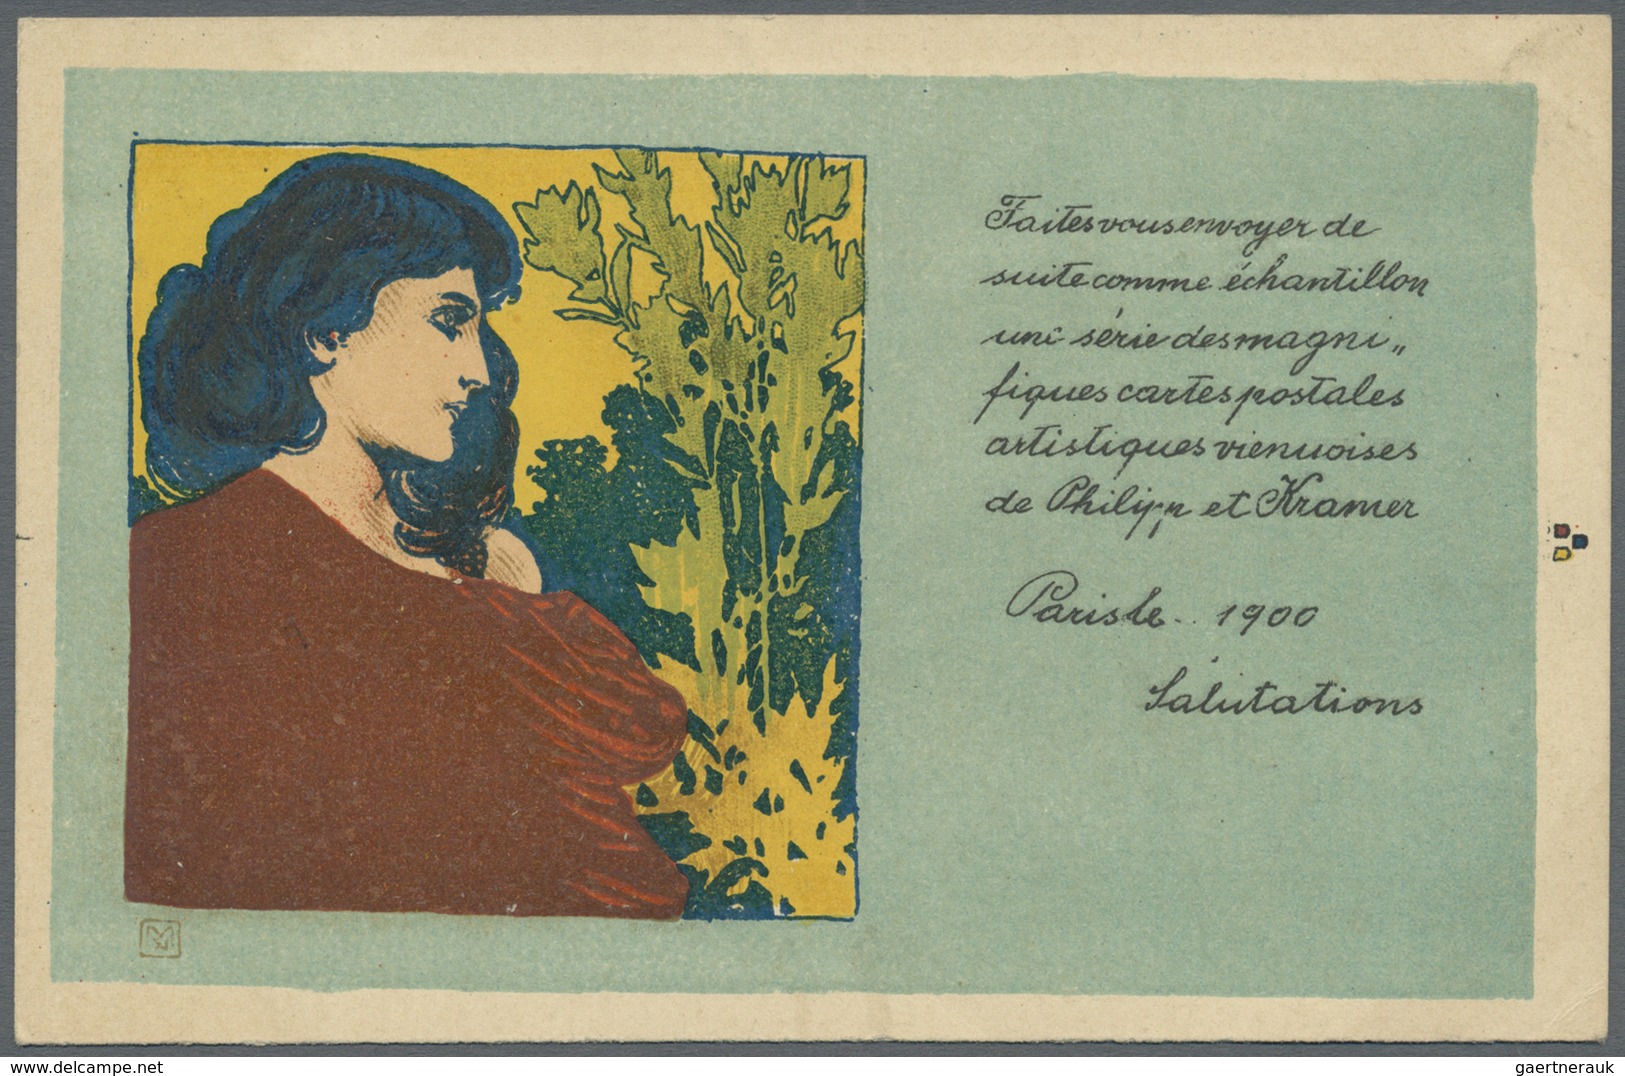 Ansichtskarten: Künstler / Artists: MOSER, Koloman (1868-1918), österreichischer Maler, Grafiker Und - Non Classés